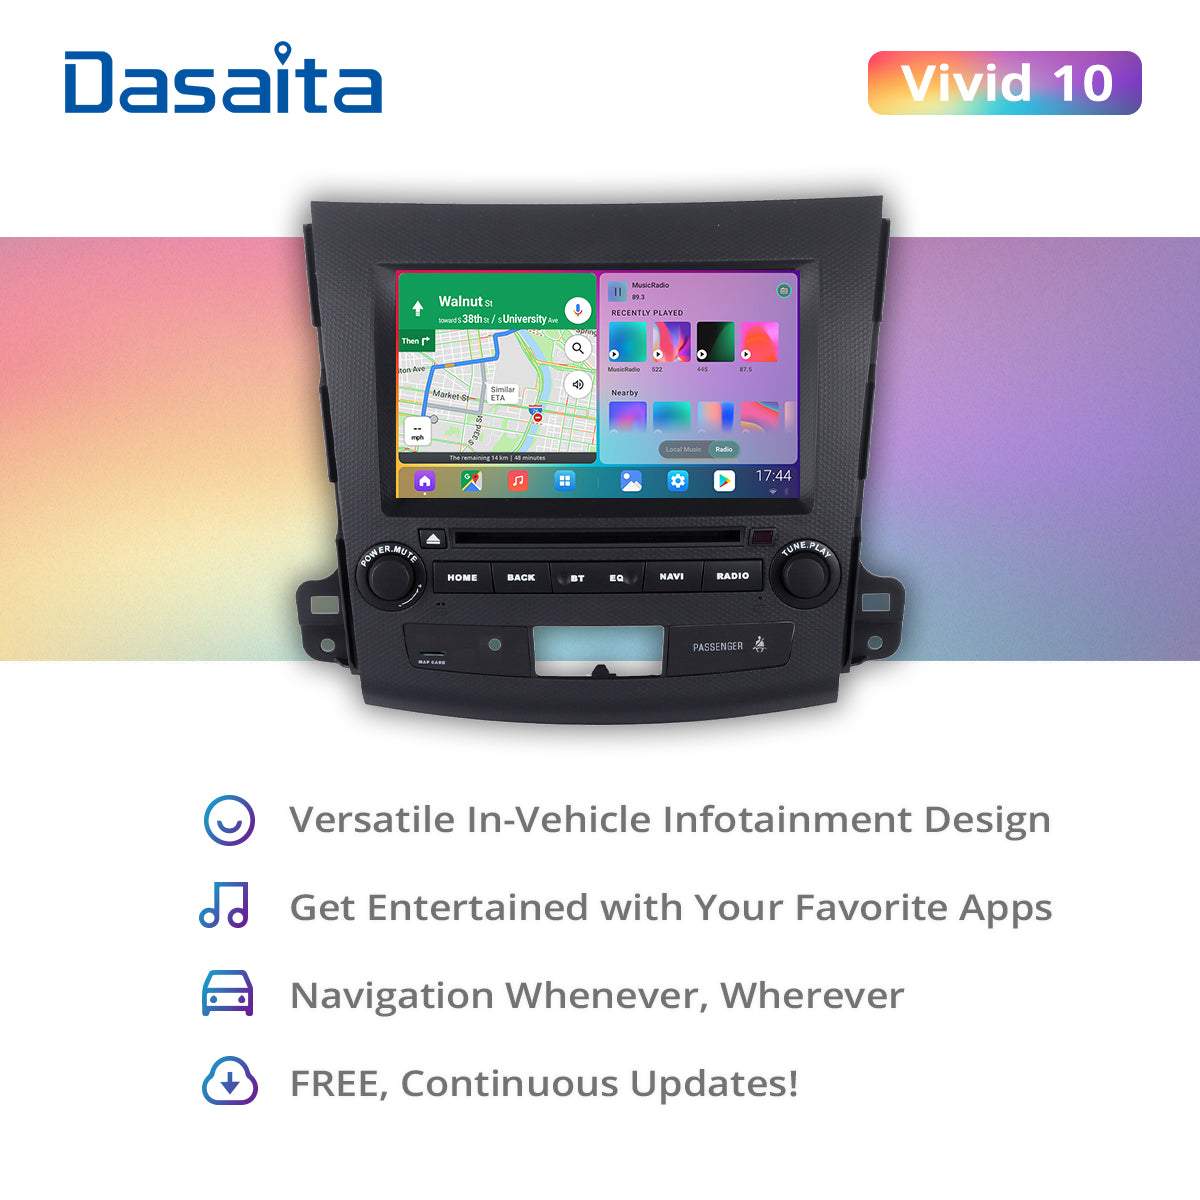 Dasaita Vivid10 For Mitsubishi Outlander 2007 2008 2009 2010 2011 2012 2013  Car Stereo Apple Carplay Android Auto Touch Screen 4G+64G DSP Radio